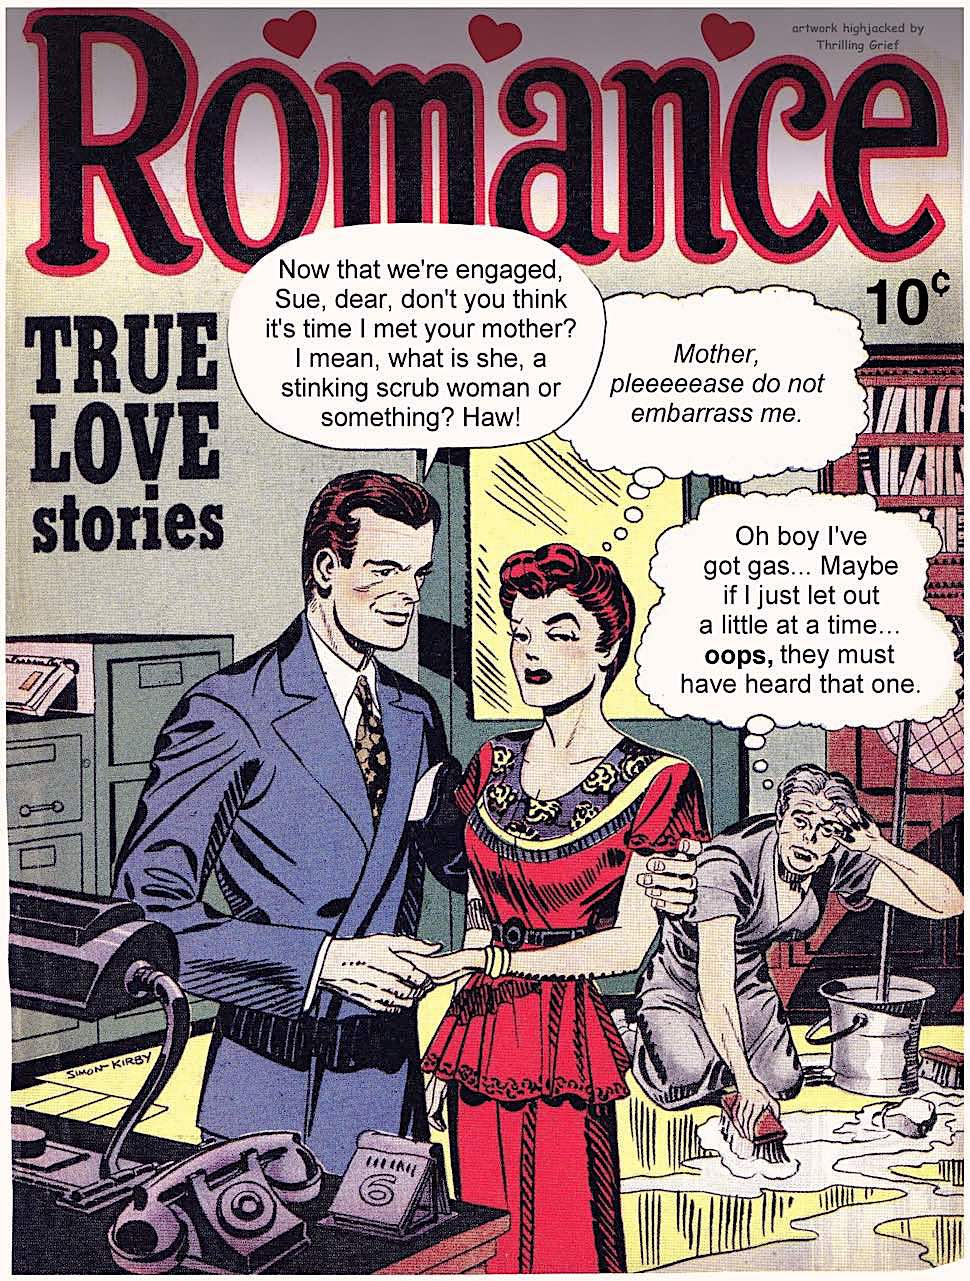 a Romance comic book parody, re-witten comic books, embarrasing mother